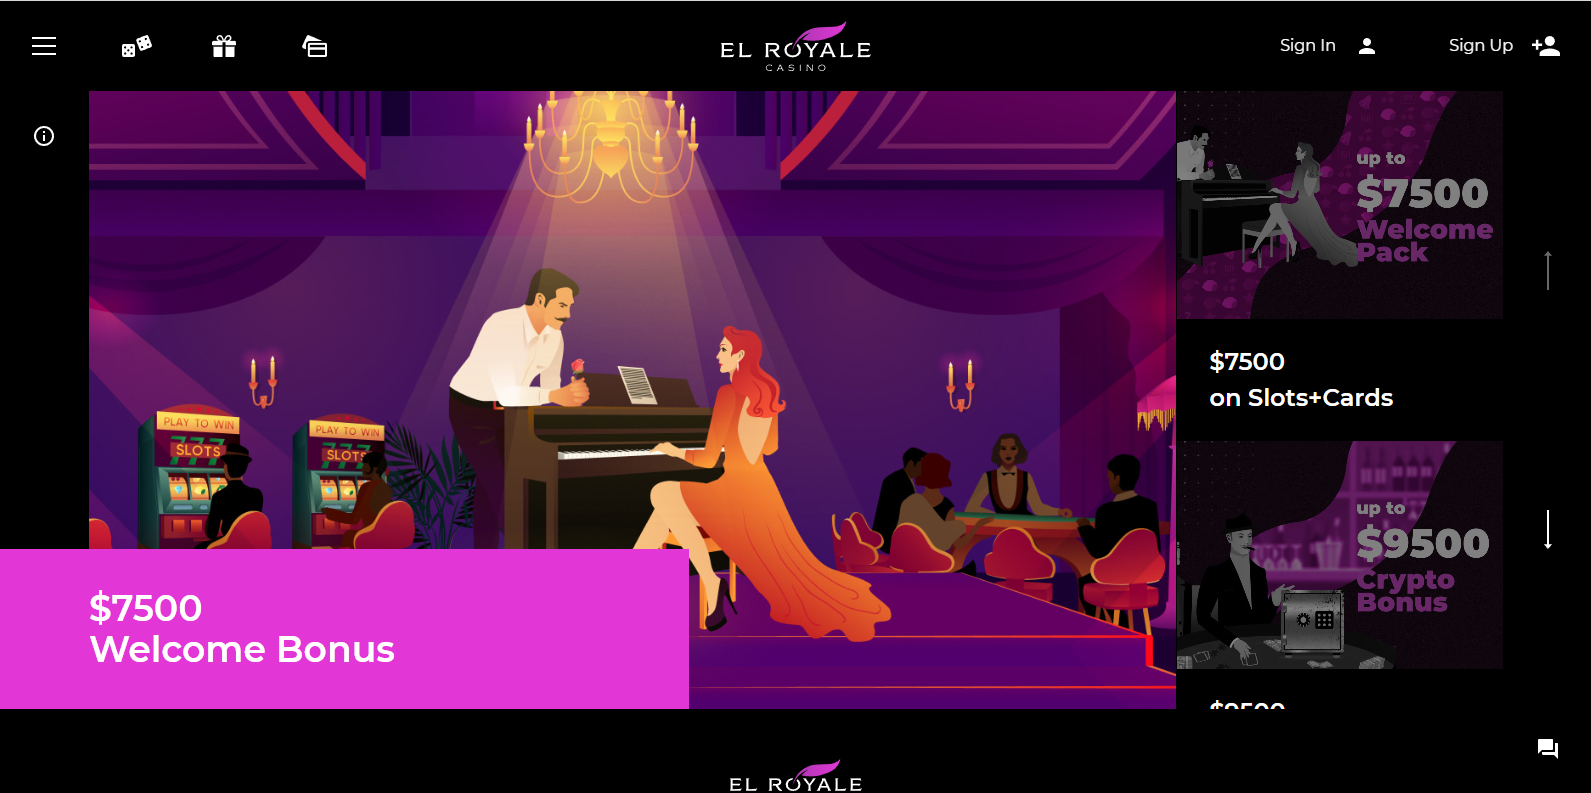 El Royale Casino Review